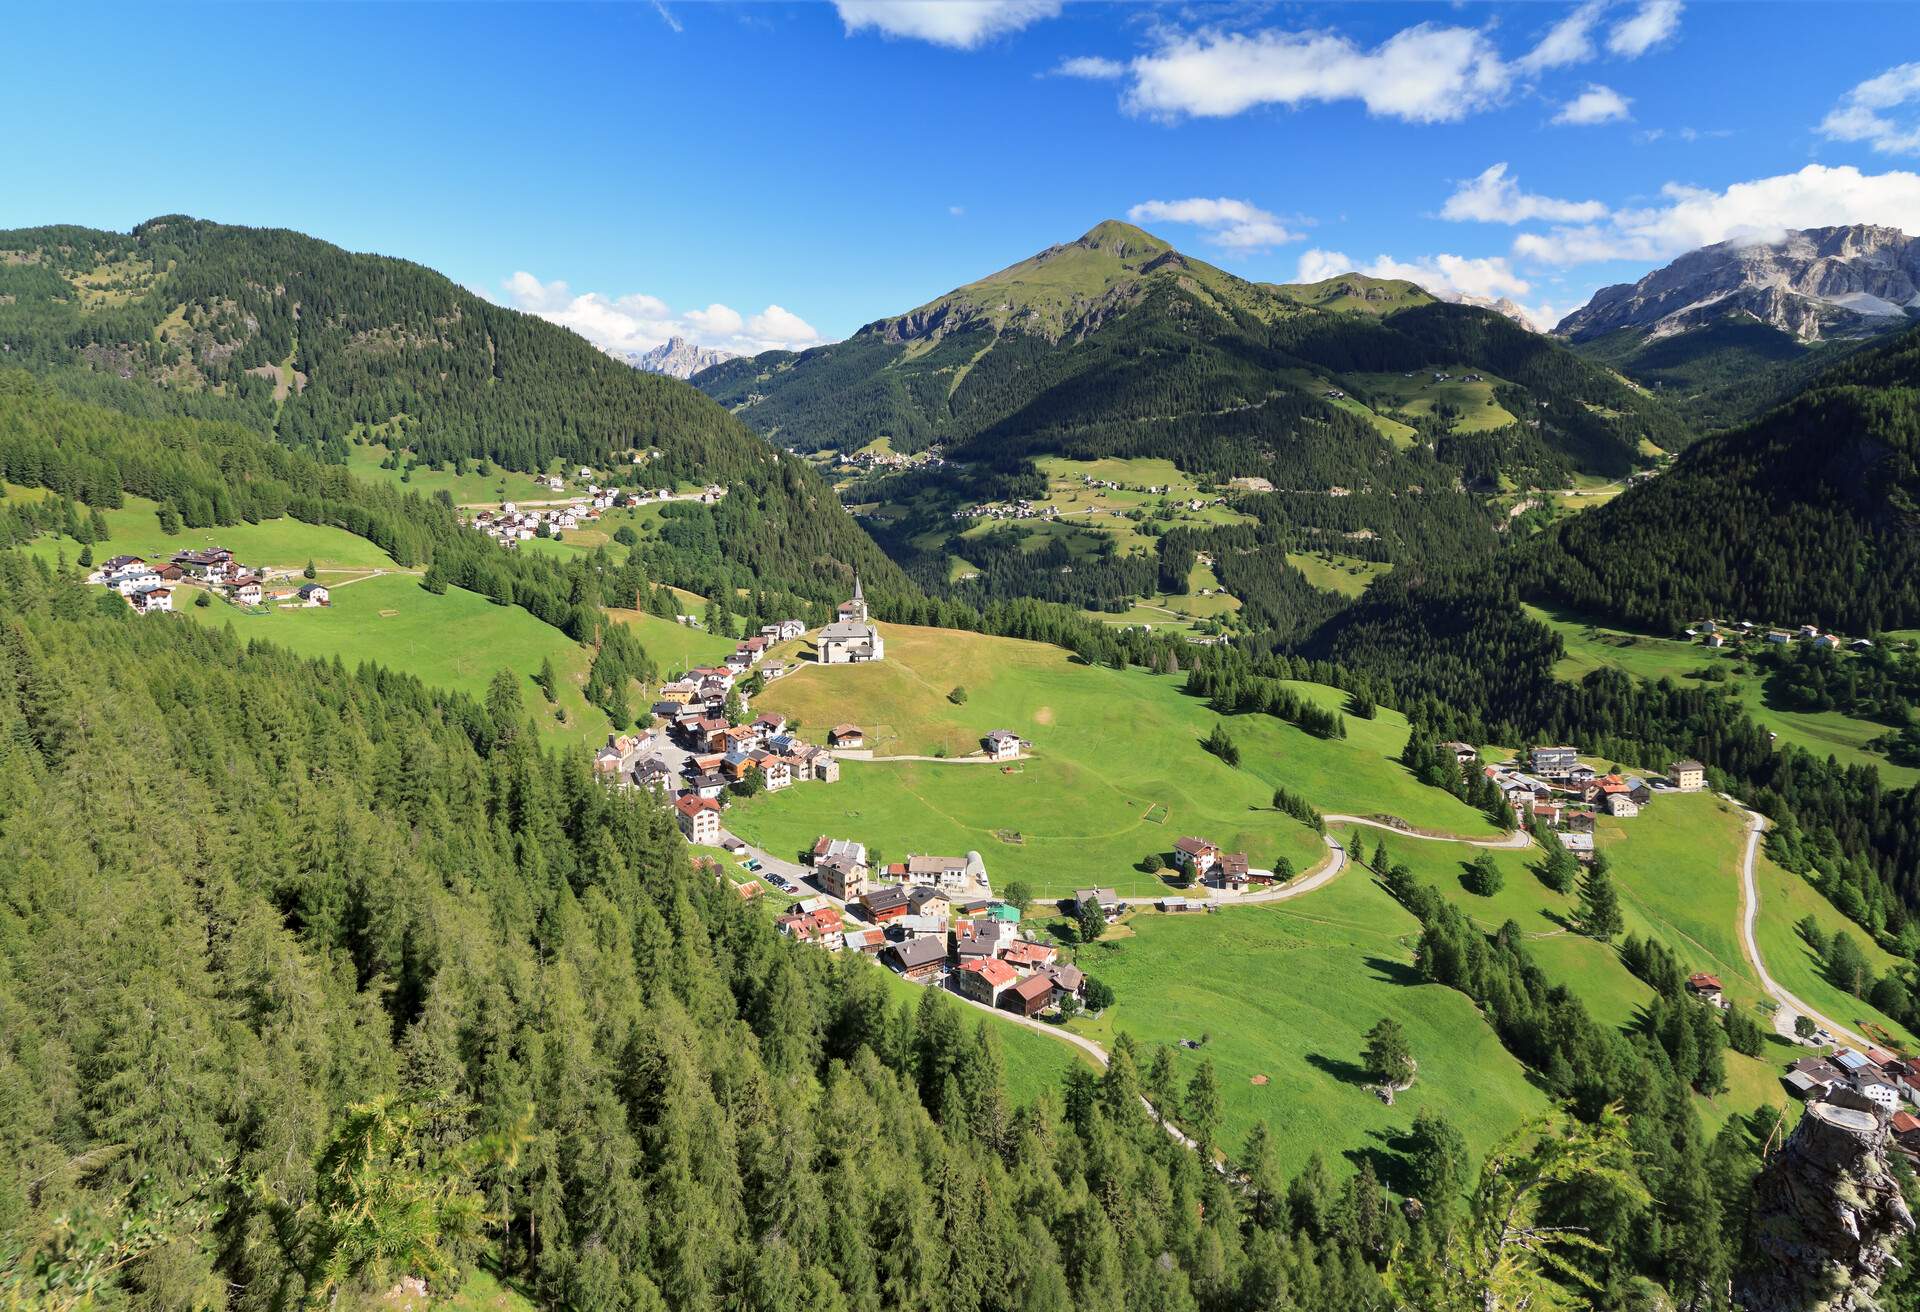 aerial view of Laste village and Cordevole valley from Sass de Rocia, Italian Dolomites; Shutterstock ID 142643014